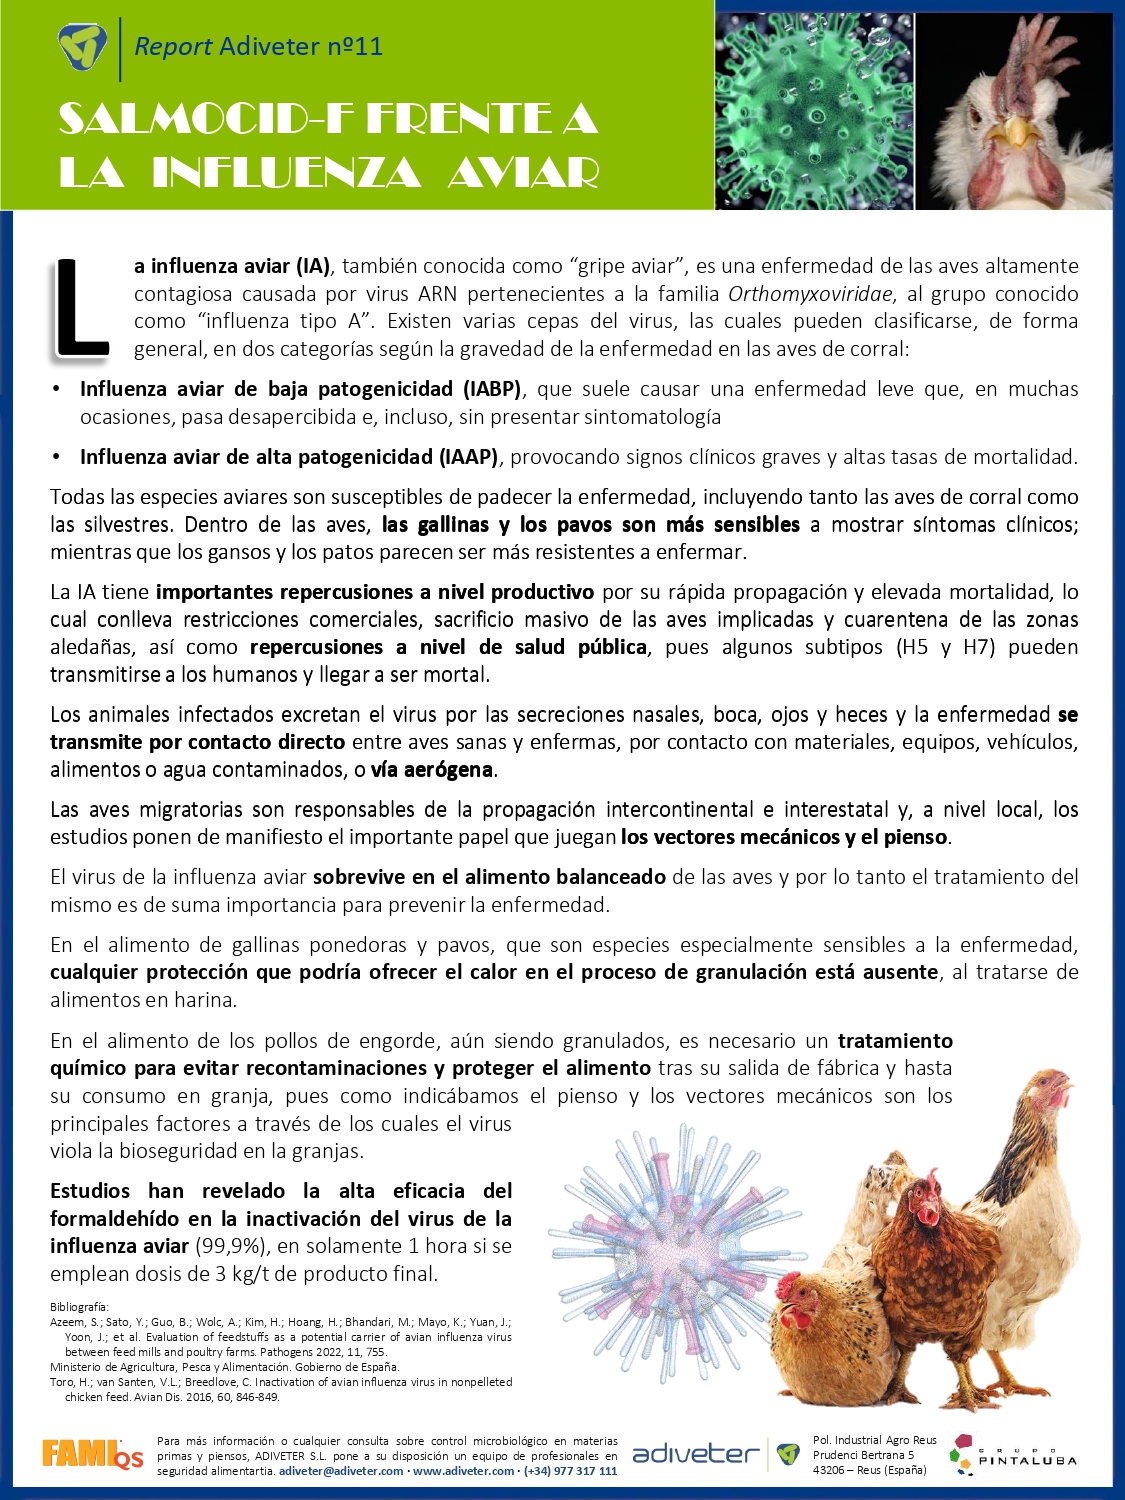 https://www.apsanet.com.ar/novedades/2/salmocid-f-frente-a-la-influenza-aviar